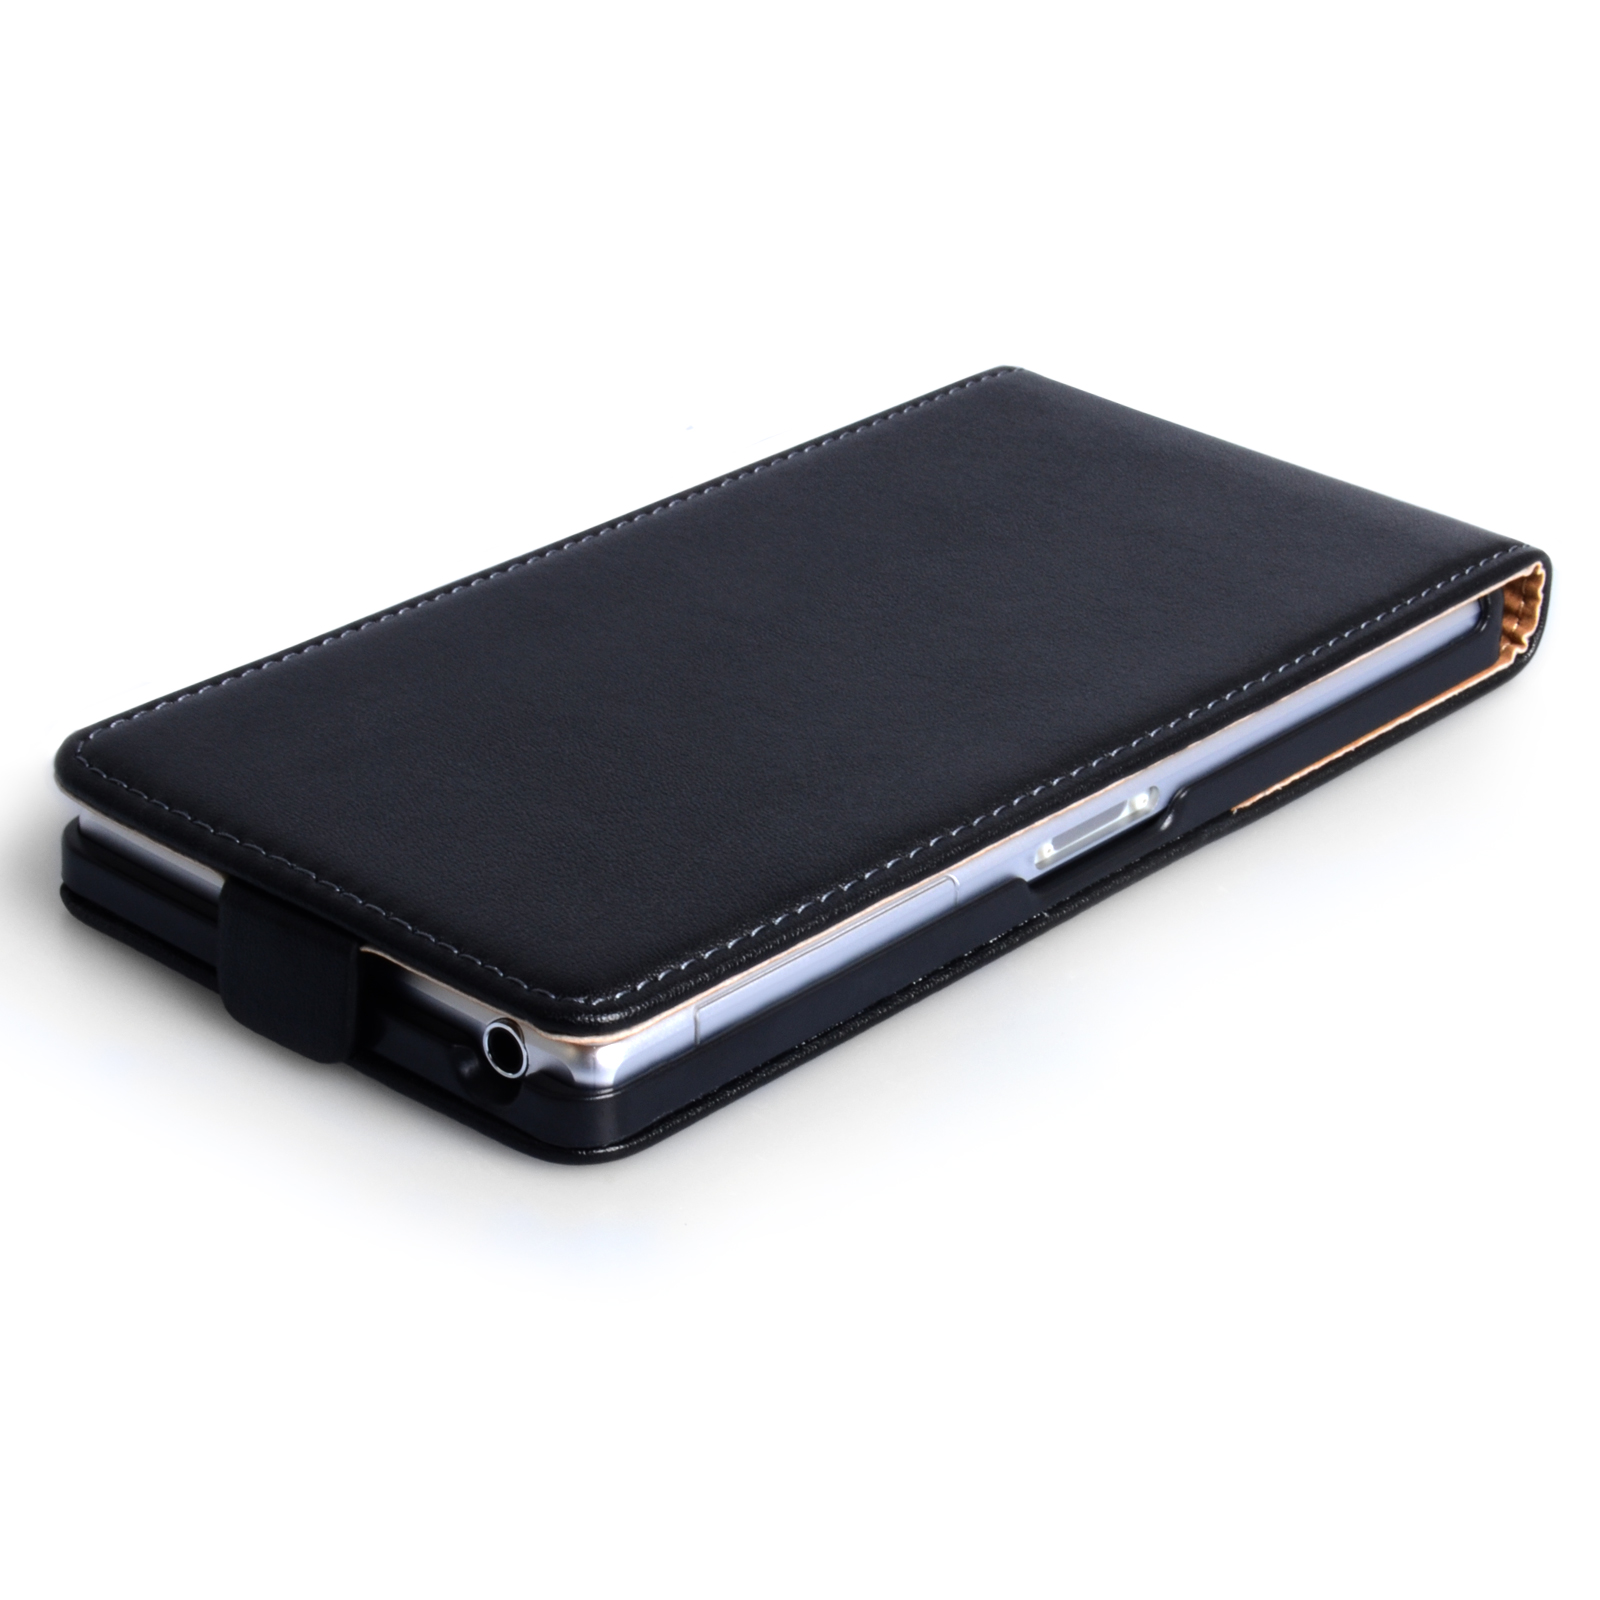 Caseflex Sony Xperia Z2 Real Leather Flip Case - Black